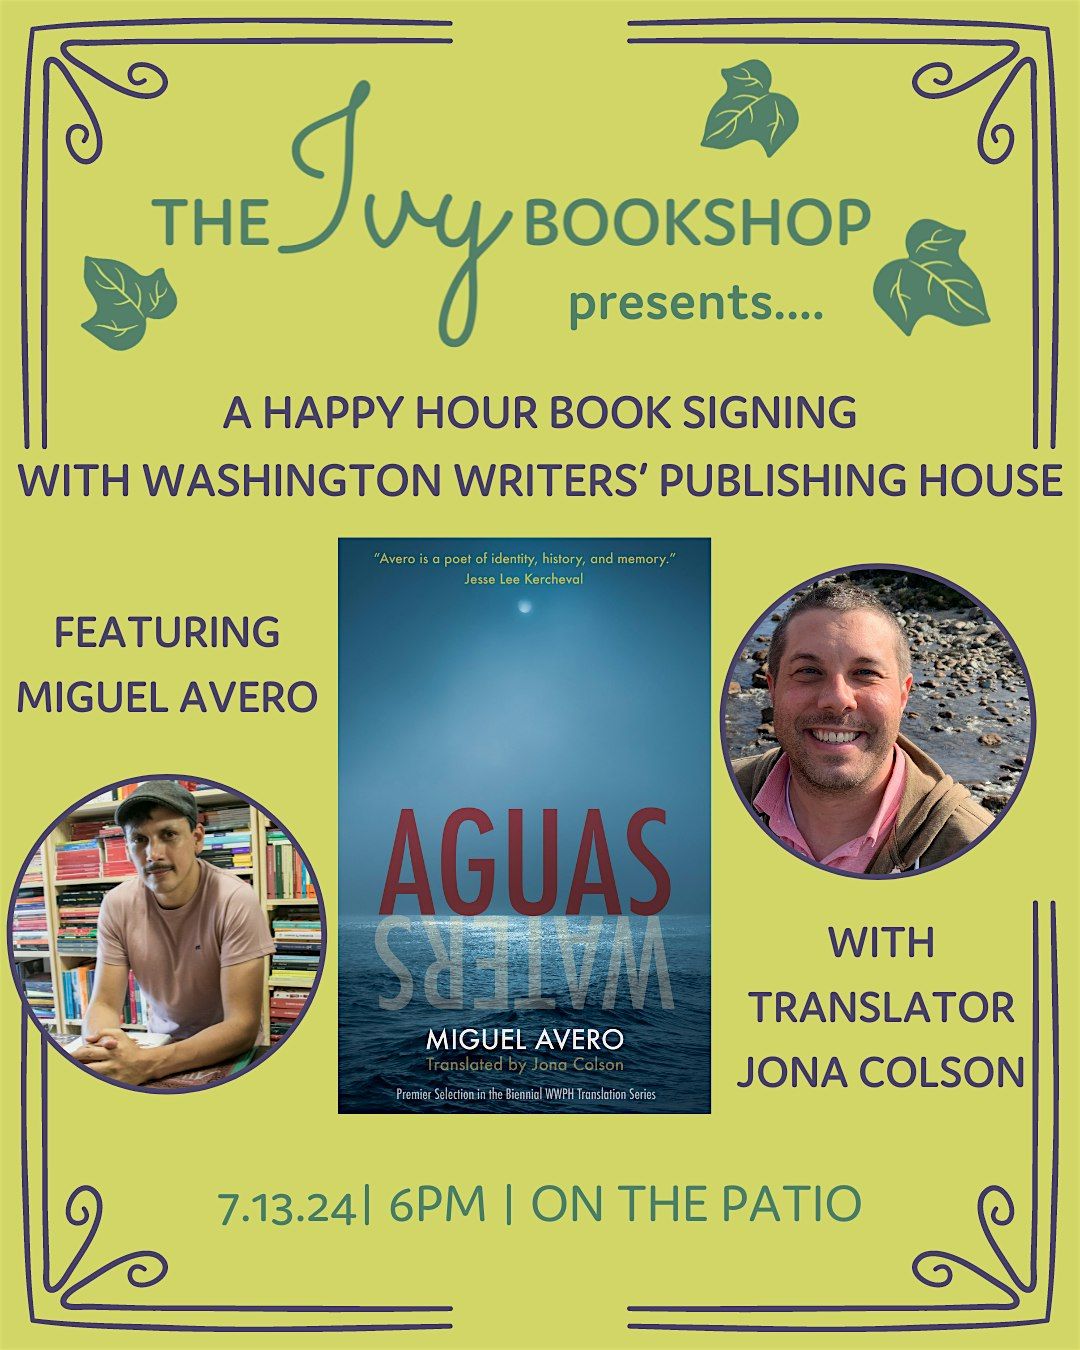 Happy Hour Book Signing with Washington Writers' Publishing House